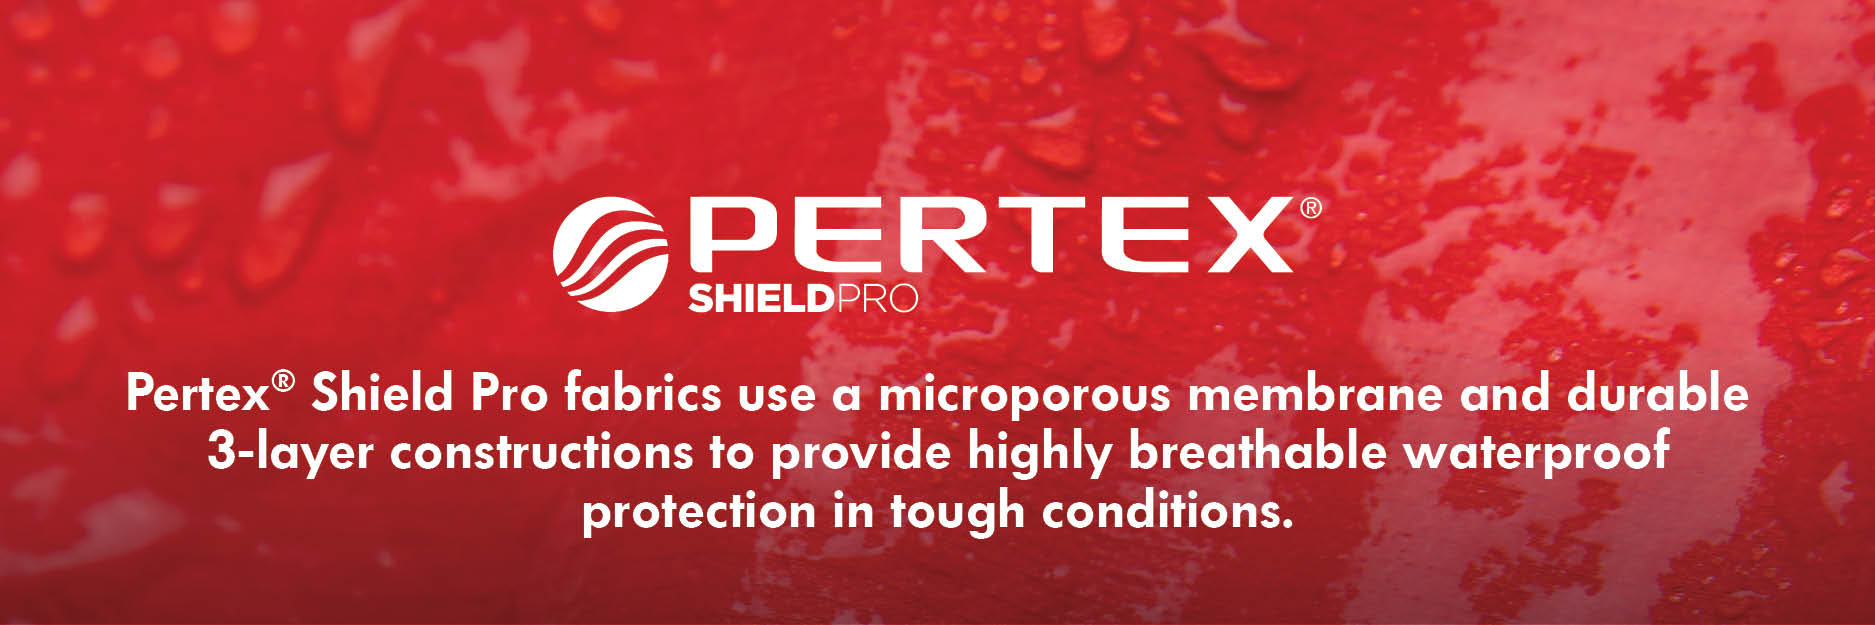 Pertex Shield Pro